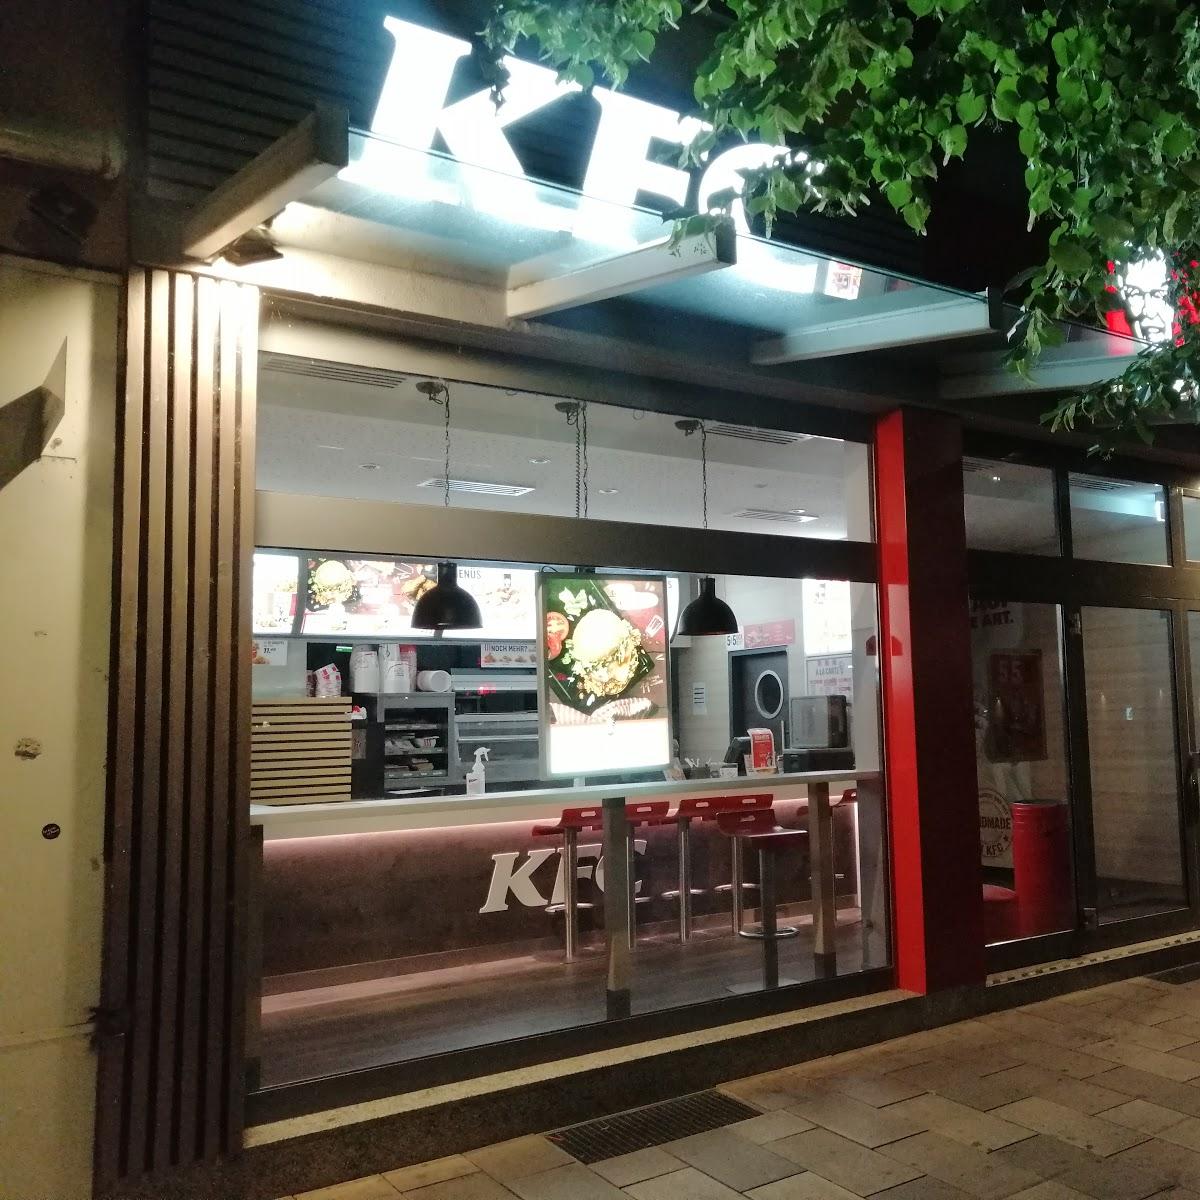 Restaurant "Kentucky Fried Chicken" in Hanau